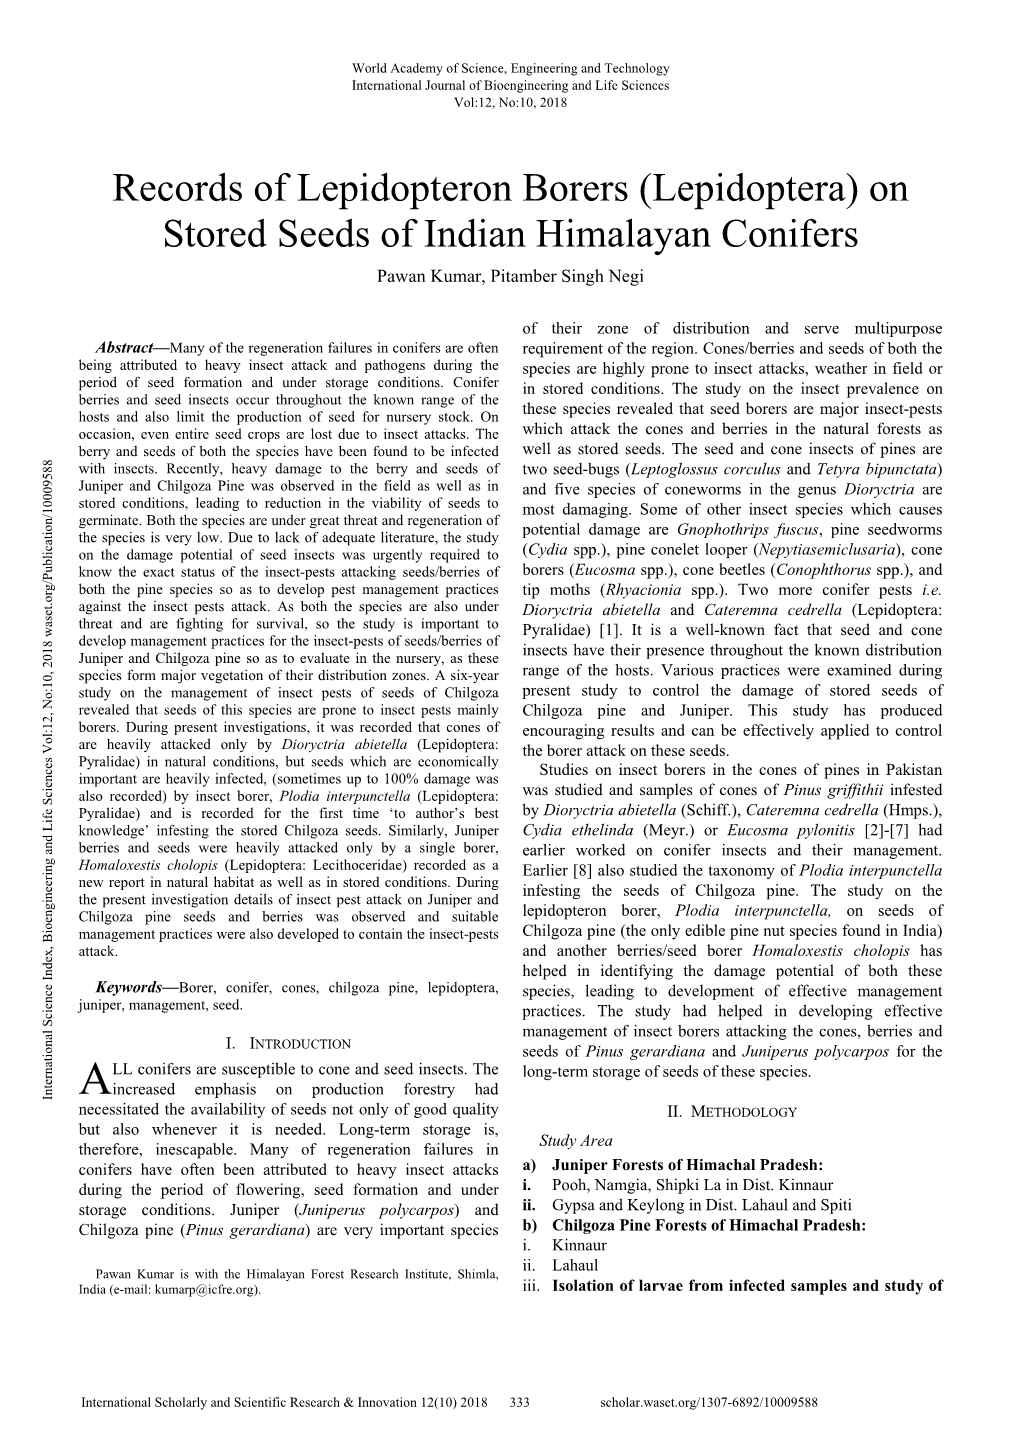 Records of Lepidopteron Borers (Lepidoptera) on Stored Seeds of Indian Himalayan Conifers Pawan Kumar, Pitamber Singh Negi